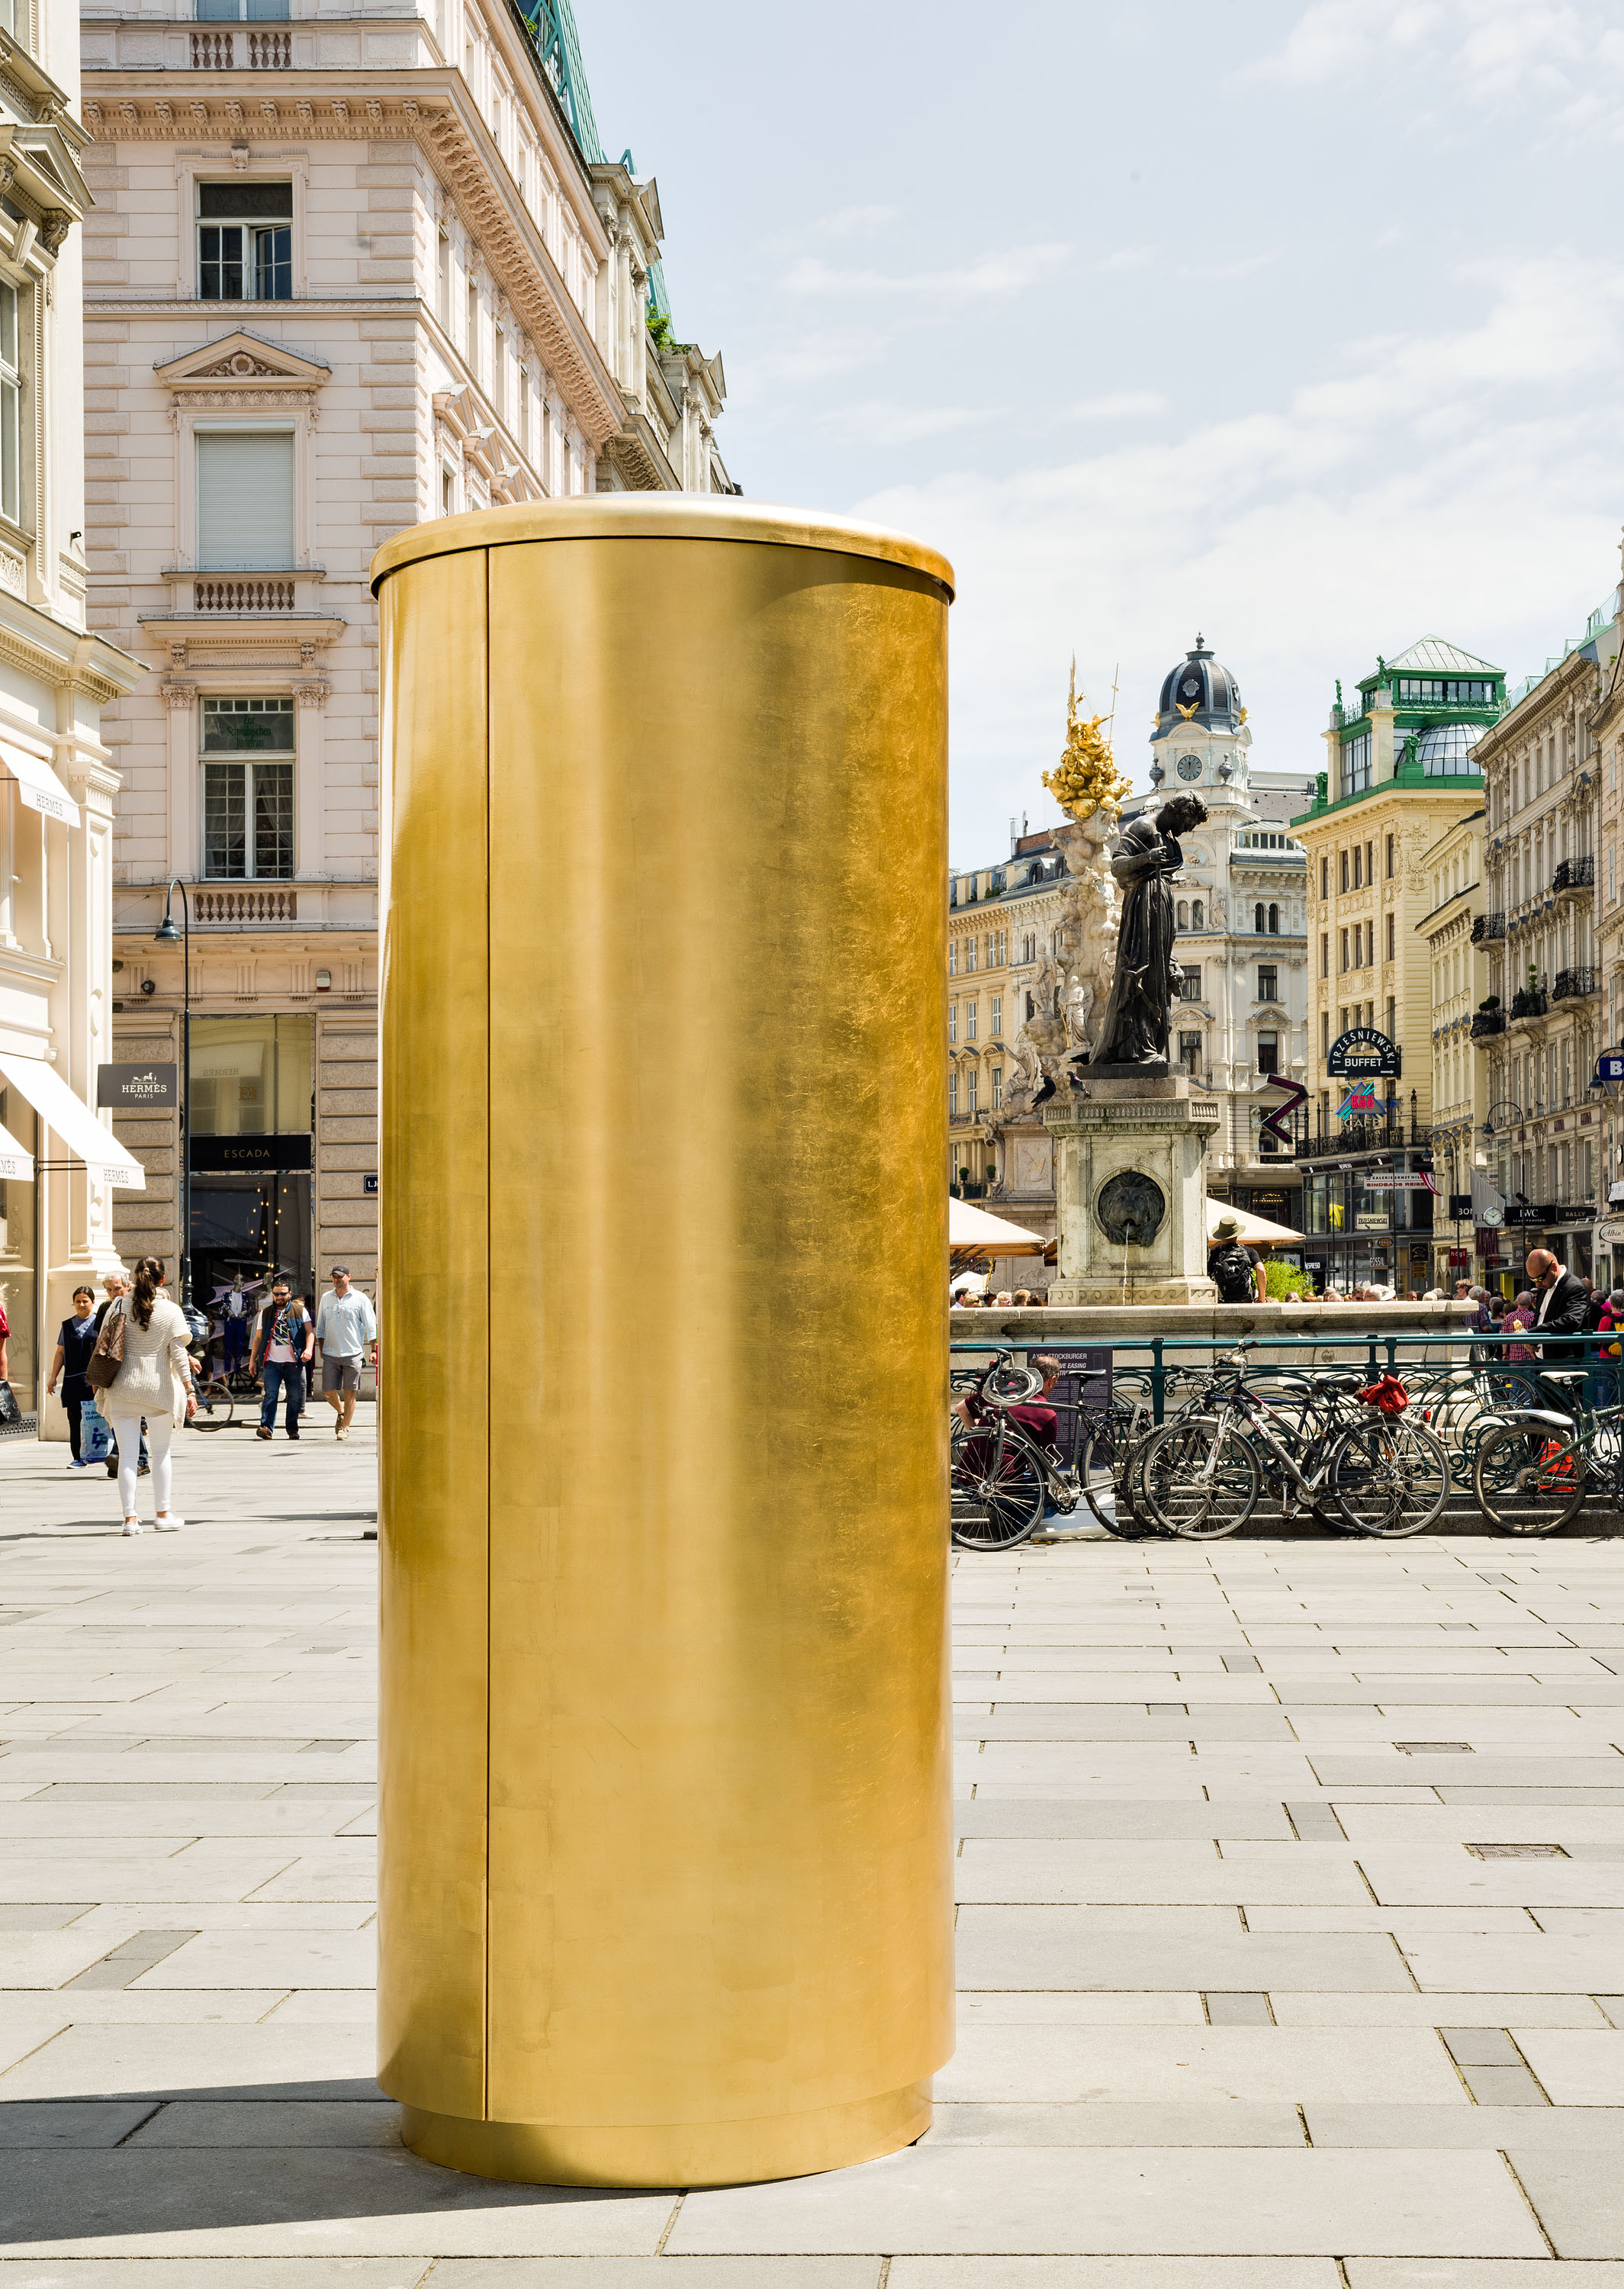 Golden cylindrical artwork in Italian city street.